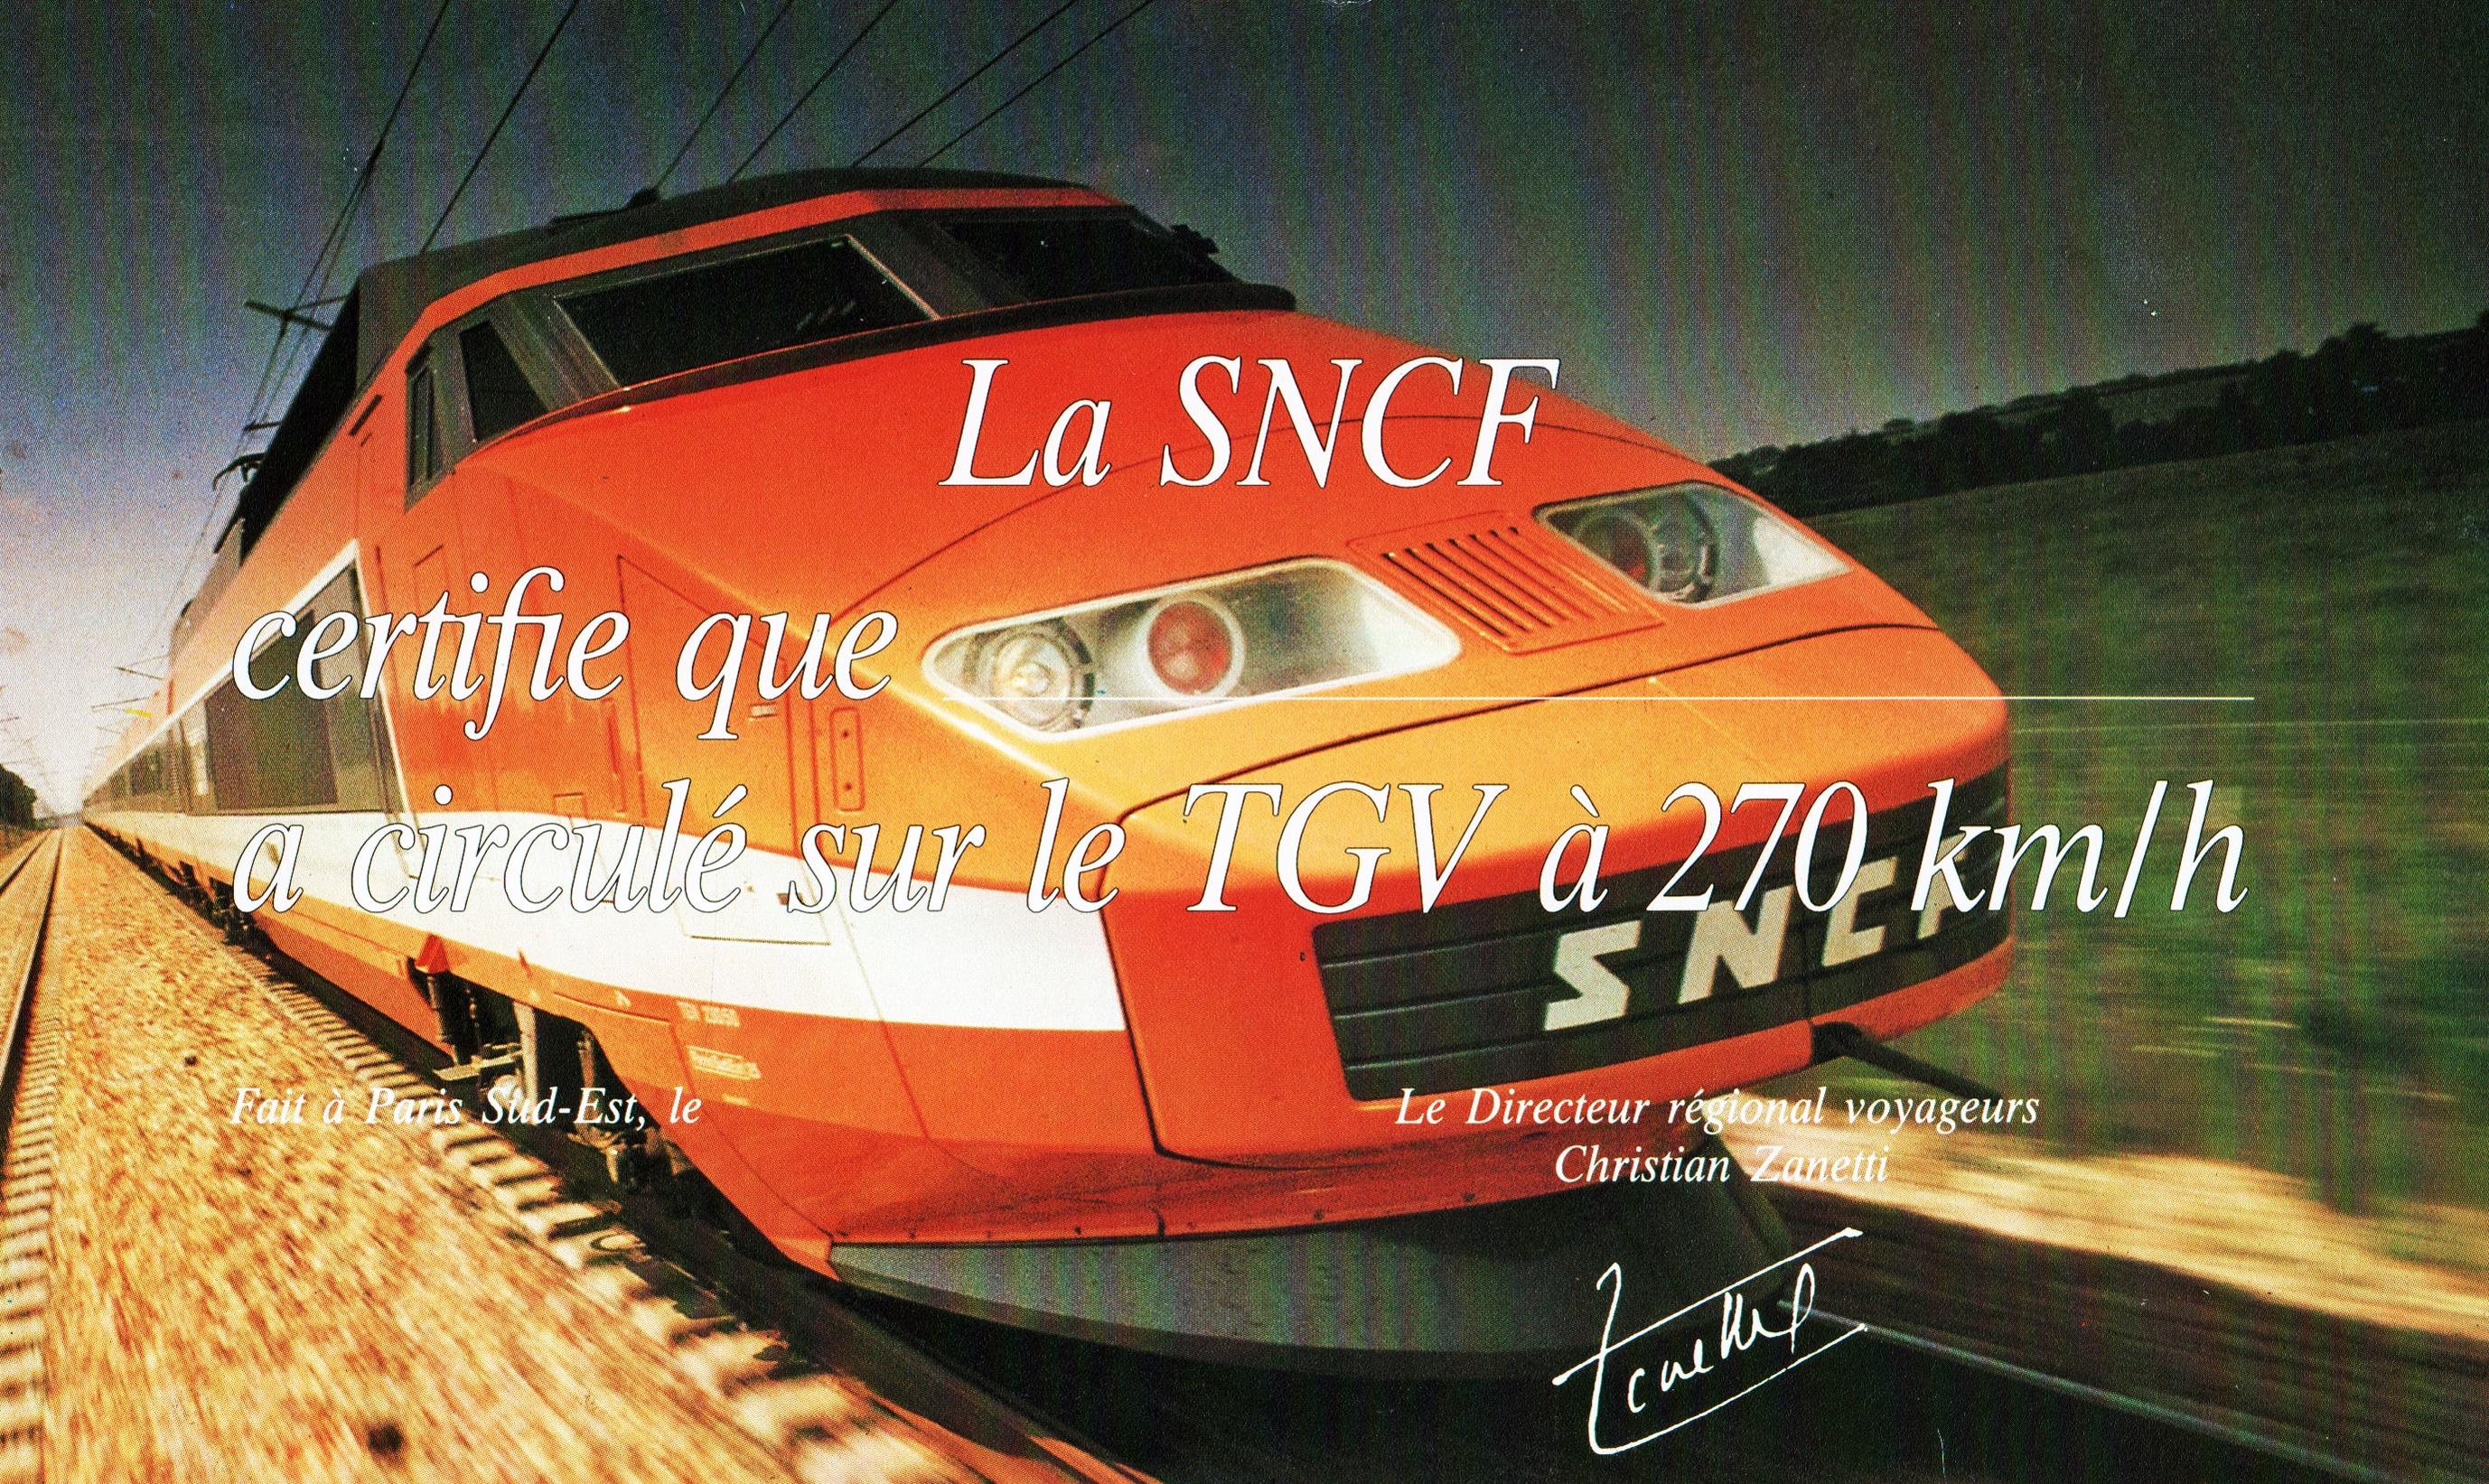 A super speed trail called La SNCF